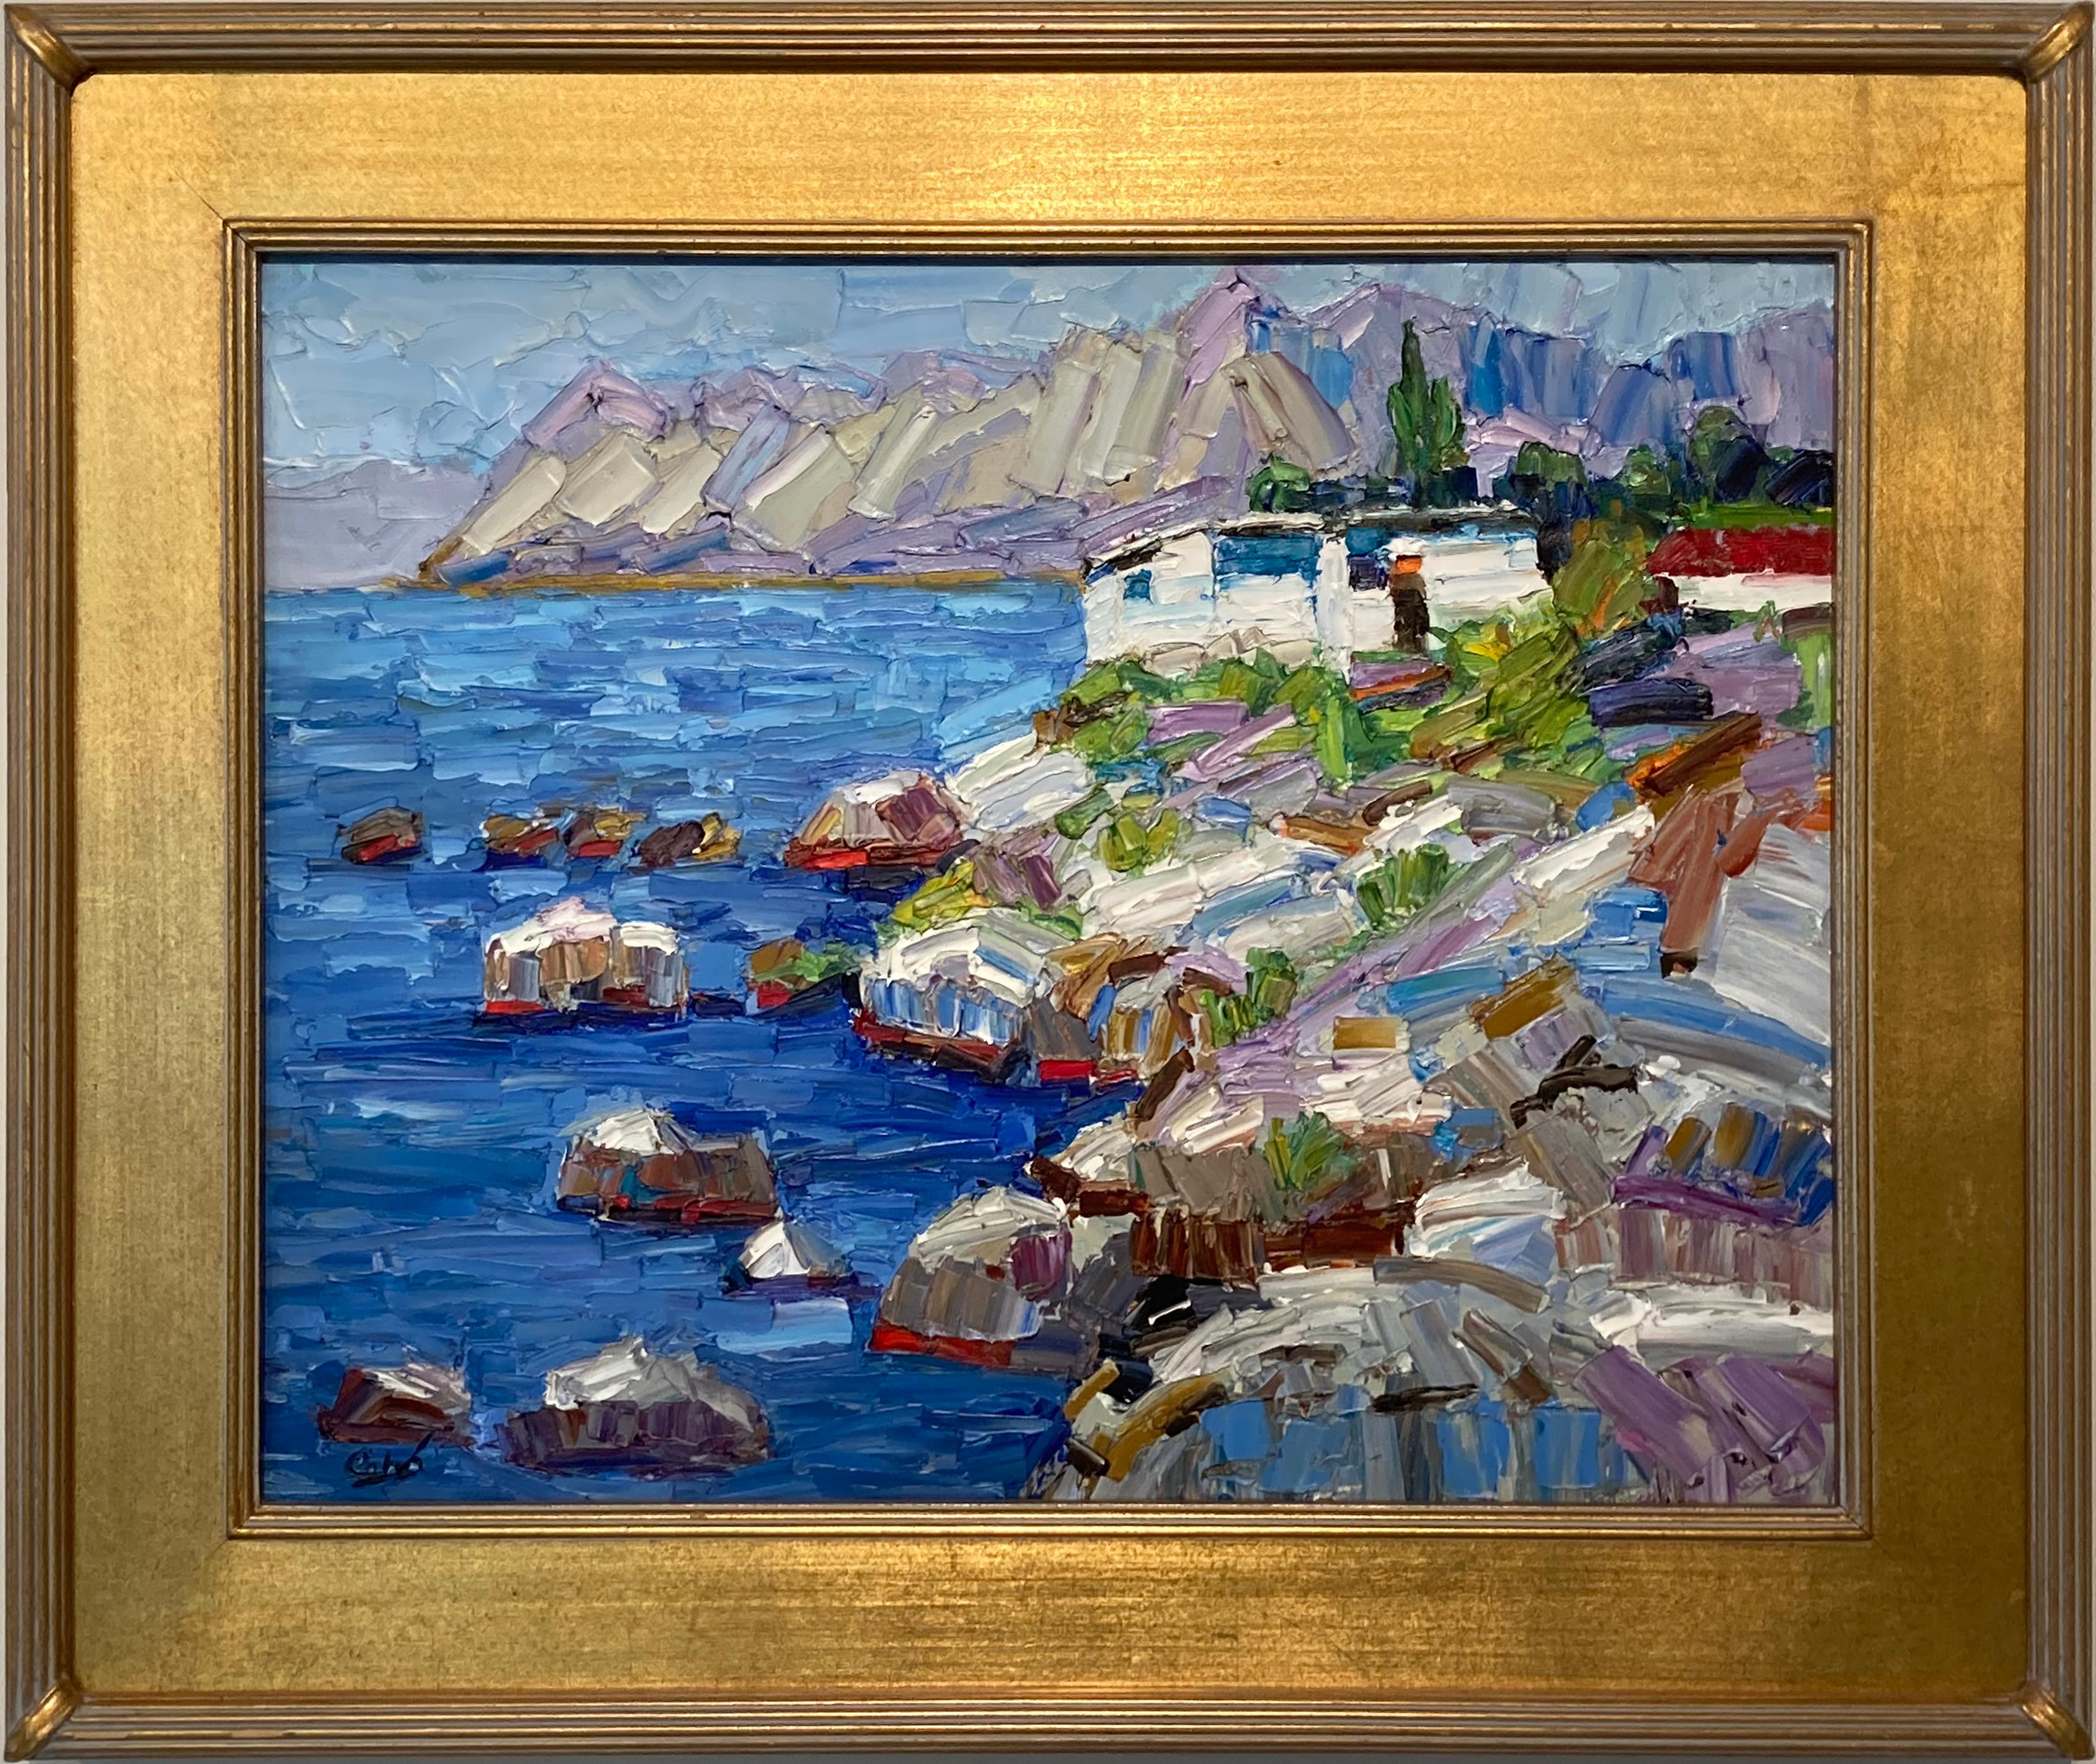 Jim Cobb Landscape Painting - 'Rocky Seascape Overlook, ' by James Cobb, Oil on Canvas Painting